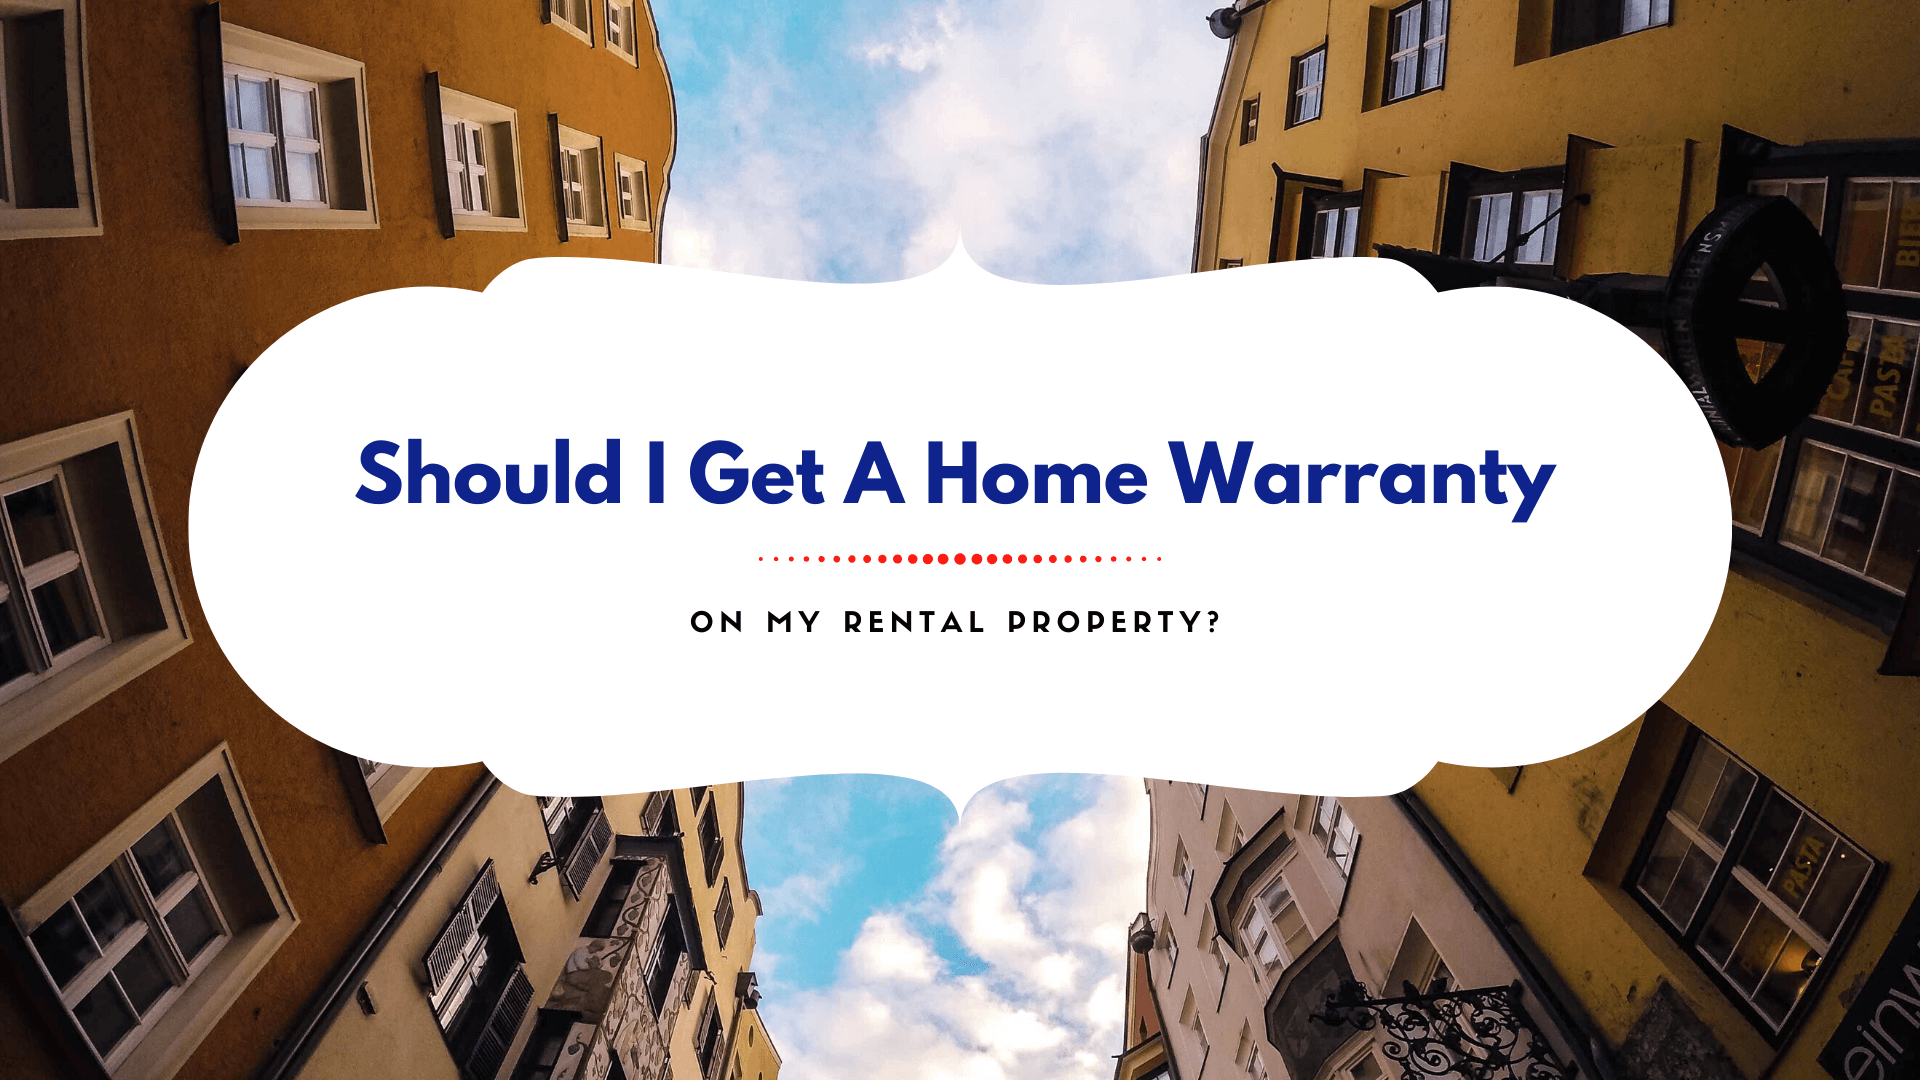 Image of should I get a home warranty